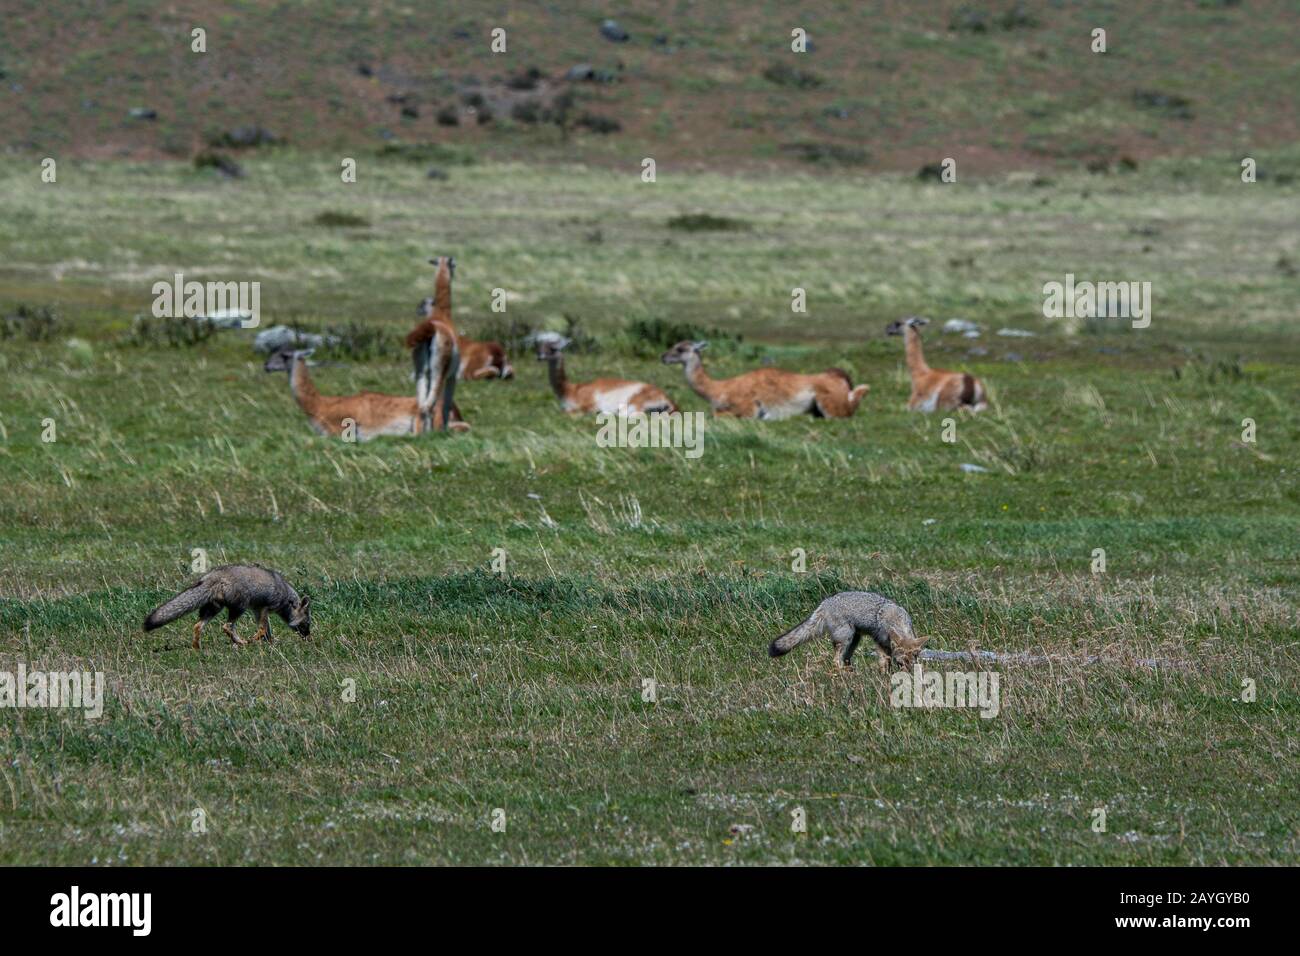 Volpi grigi (Urocyon cinereoargenteus), o volpi grigi, alla ricerca di cibo nell'erba del Parco Nazionale Torres del Paine nel Cile meridionale con guanacos in Foto Stock